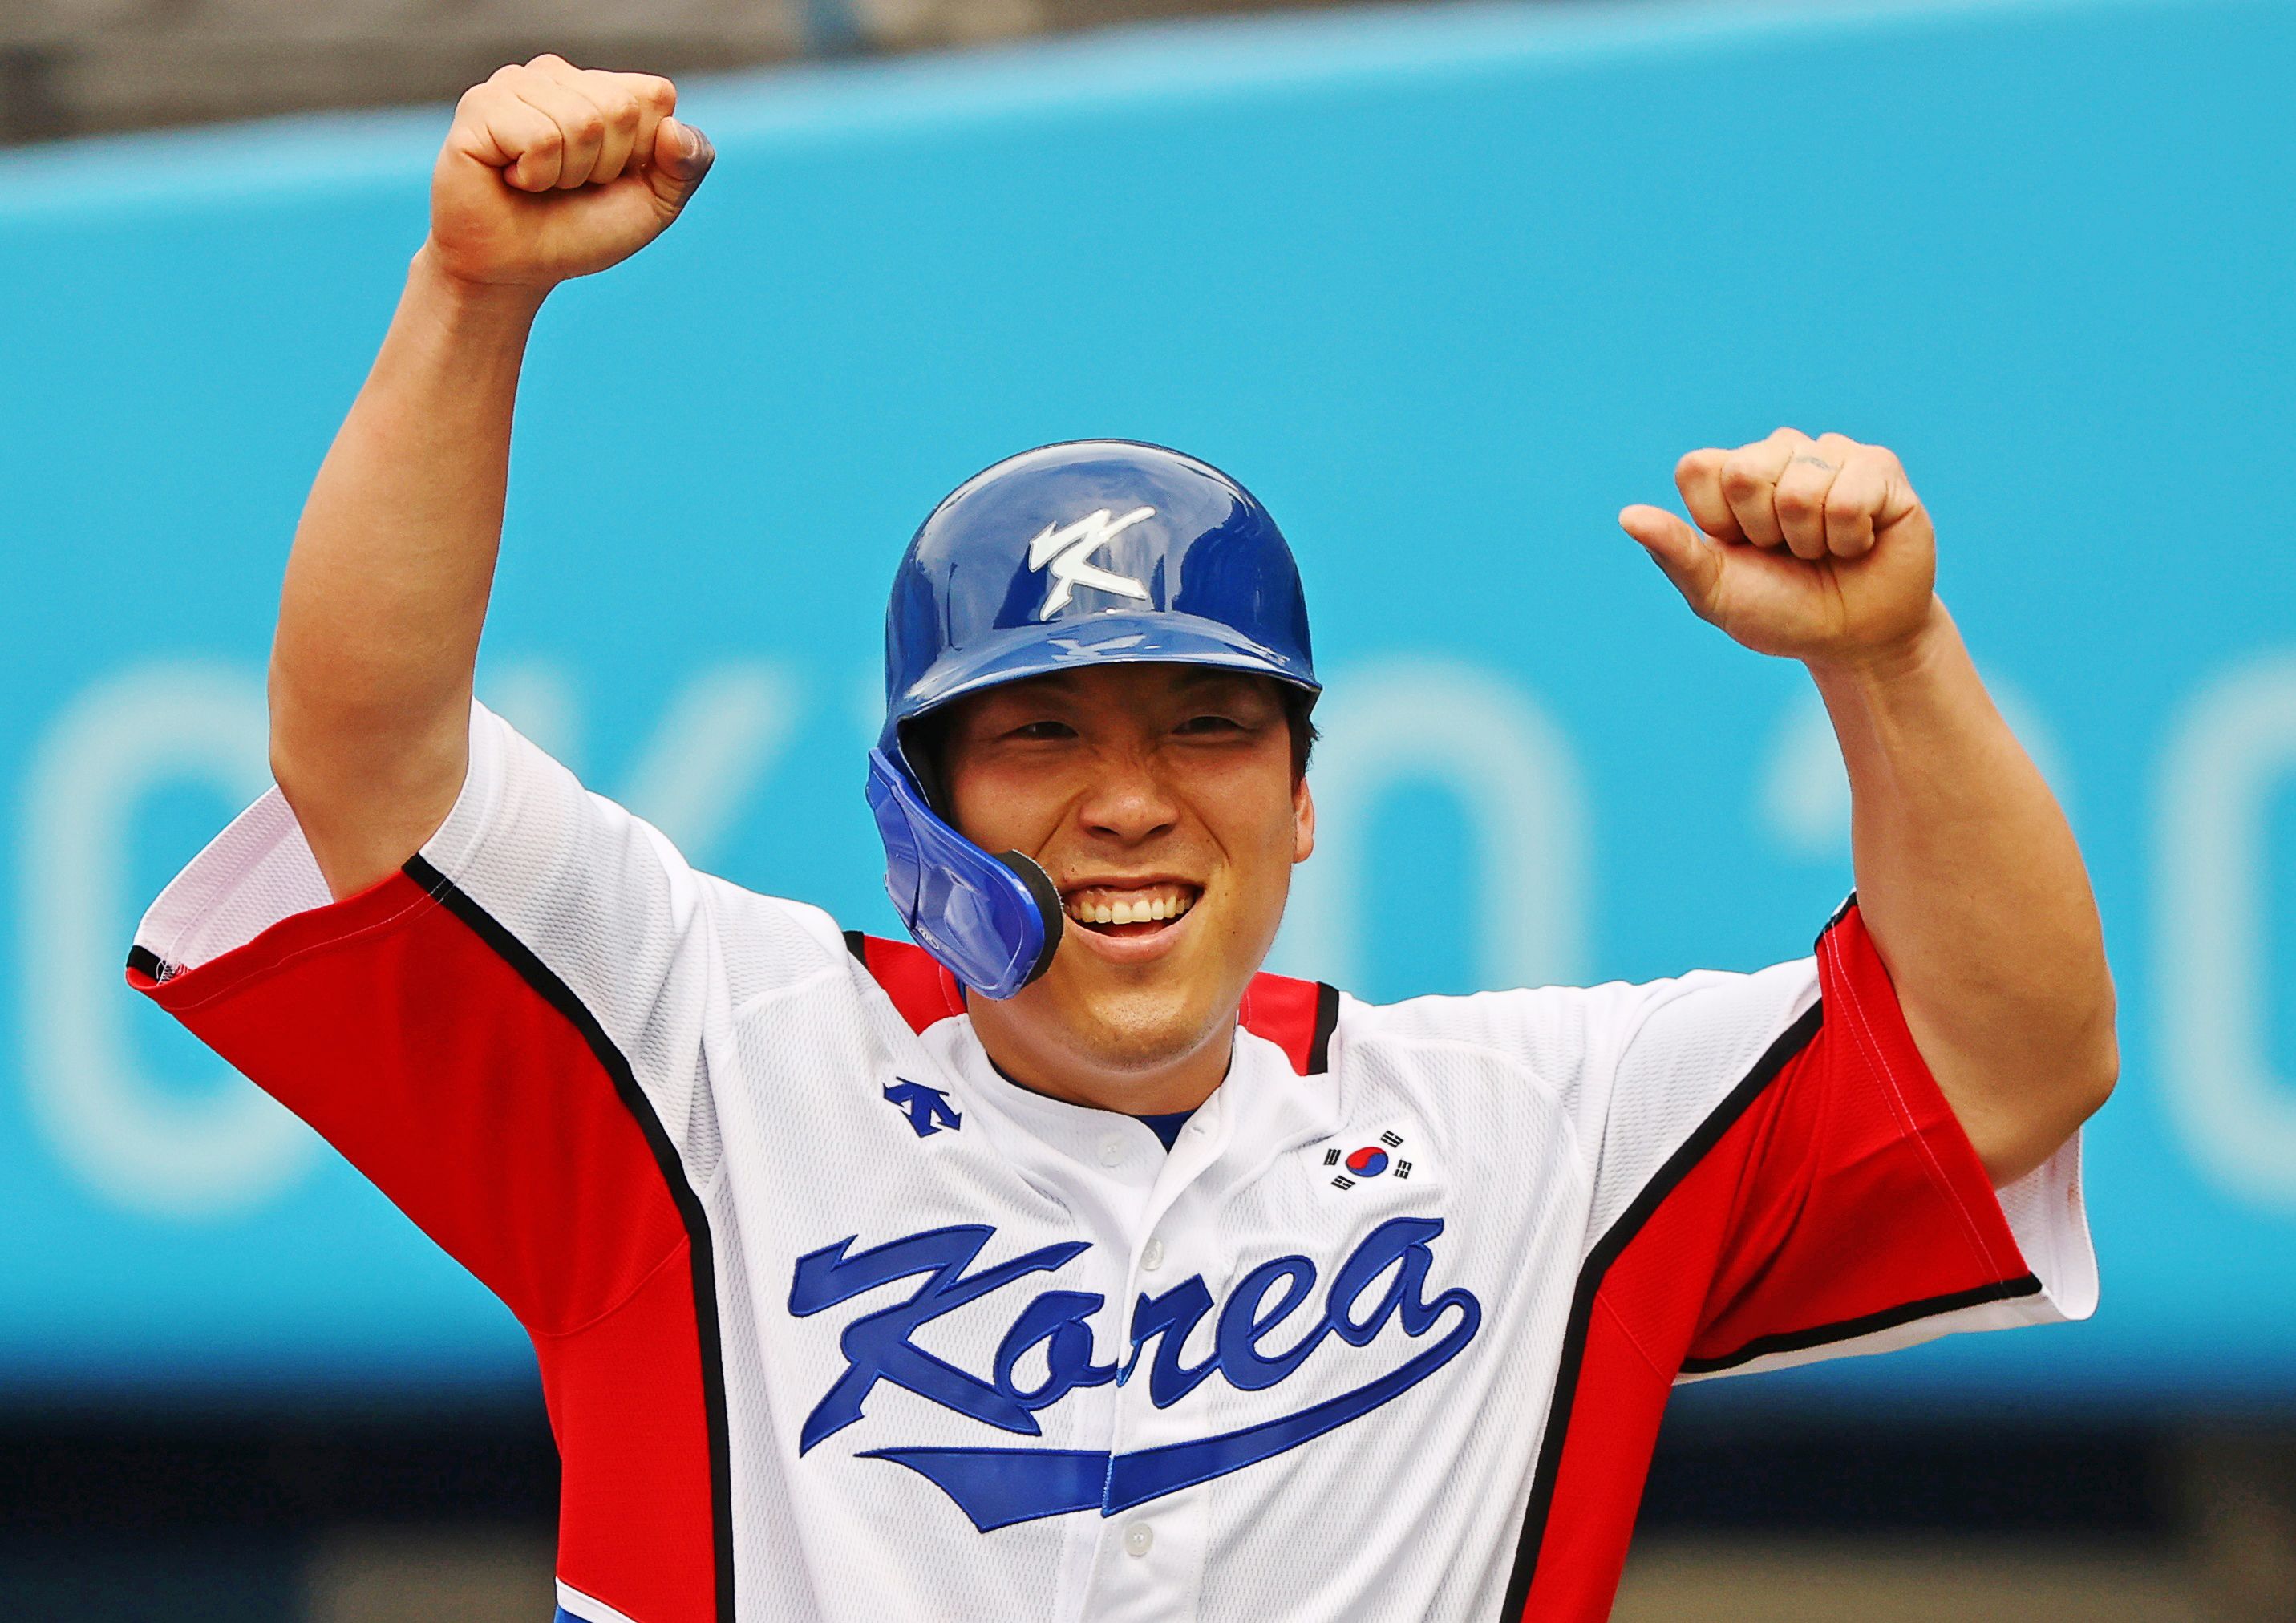 Baseball-Japan, South Korea clinch spots in final four